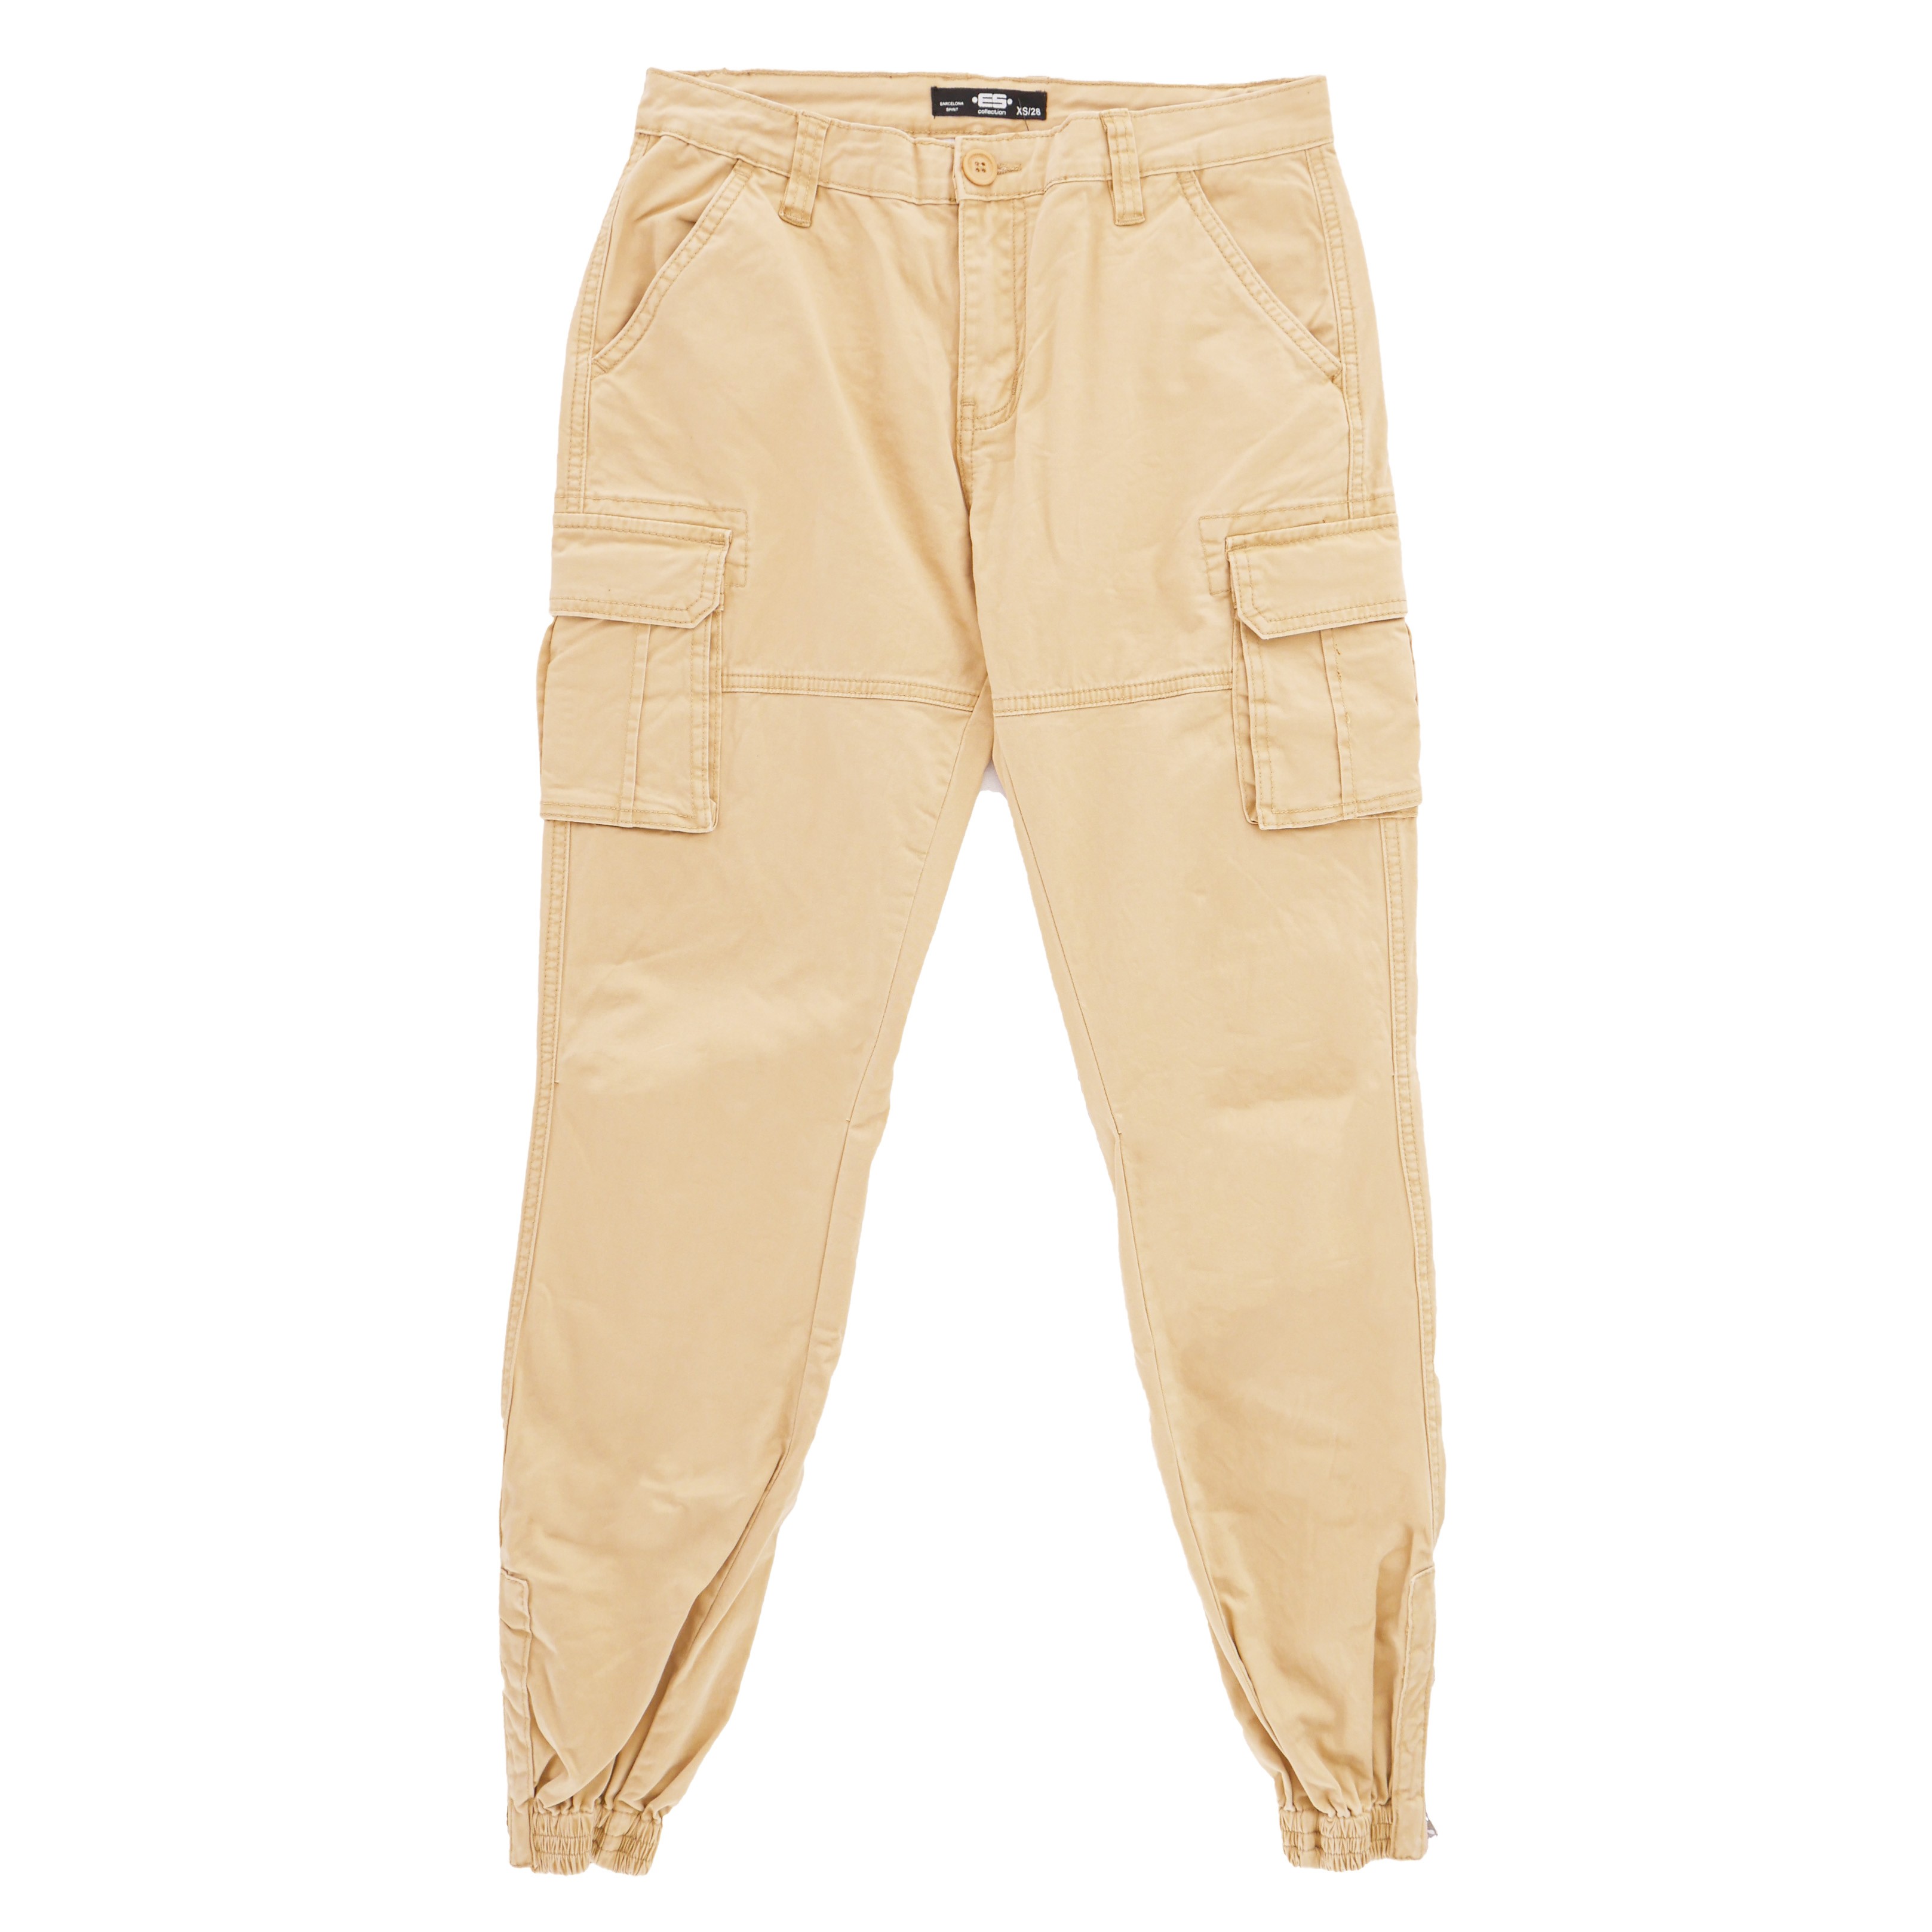 Pantalón cargo elástico beige con grandes bolsillos